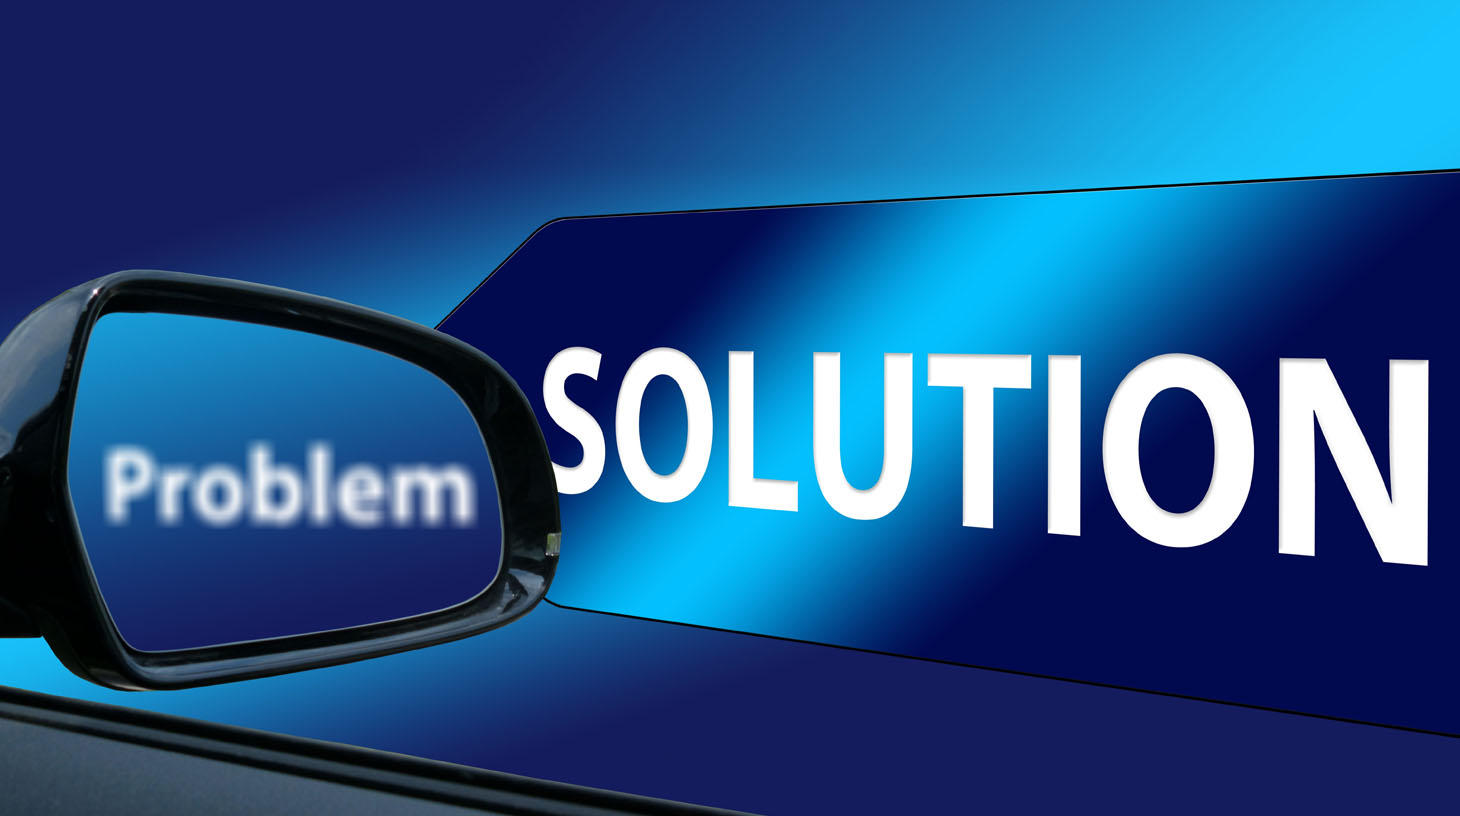 Problem Solution Image